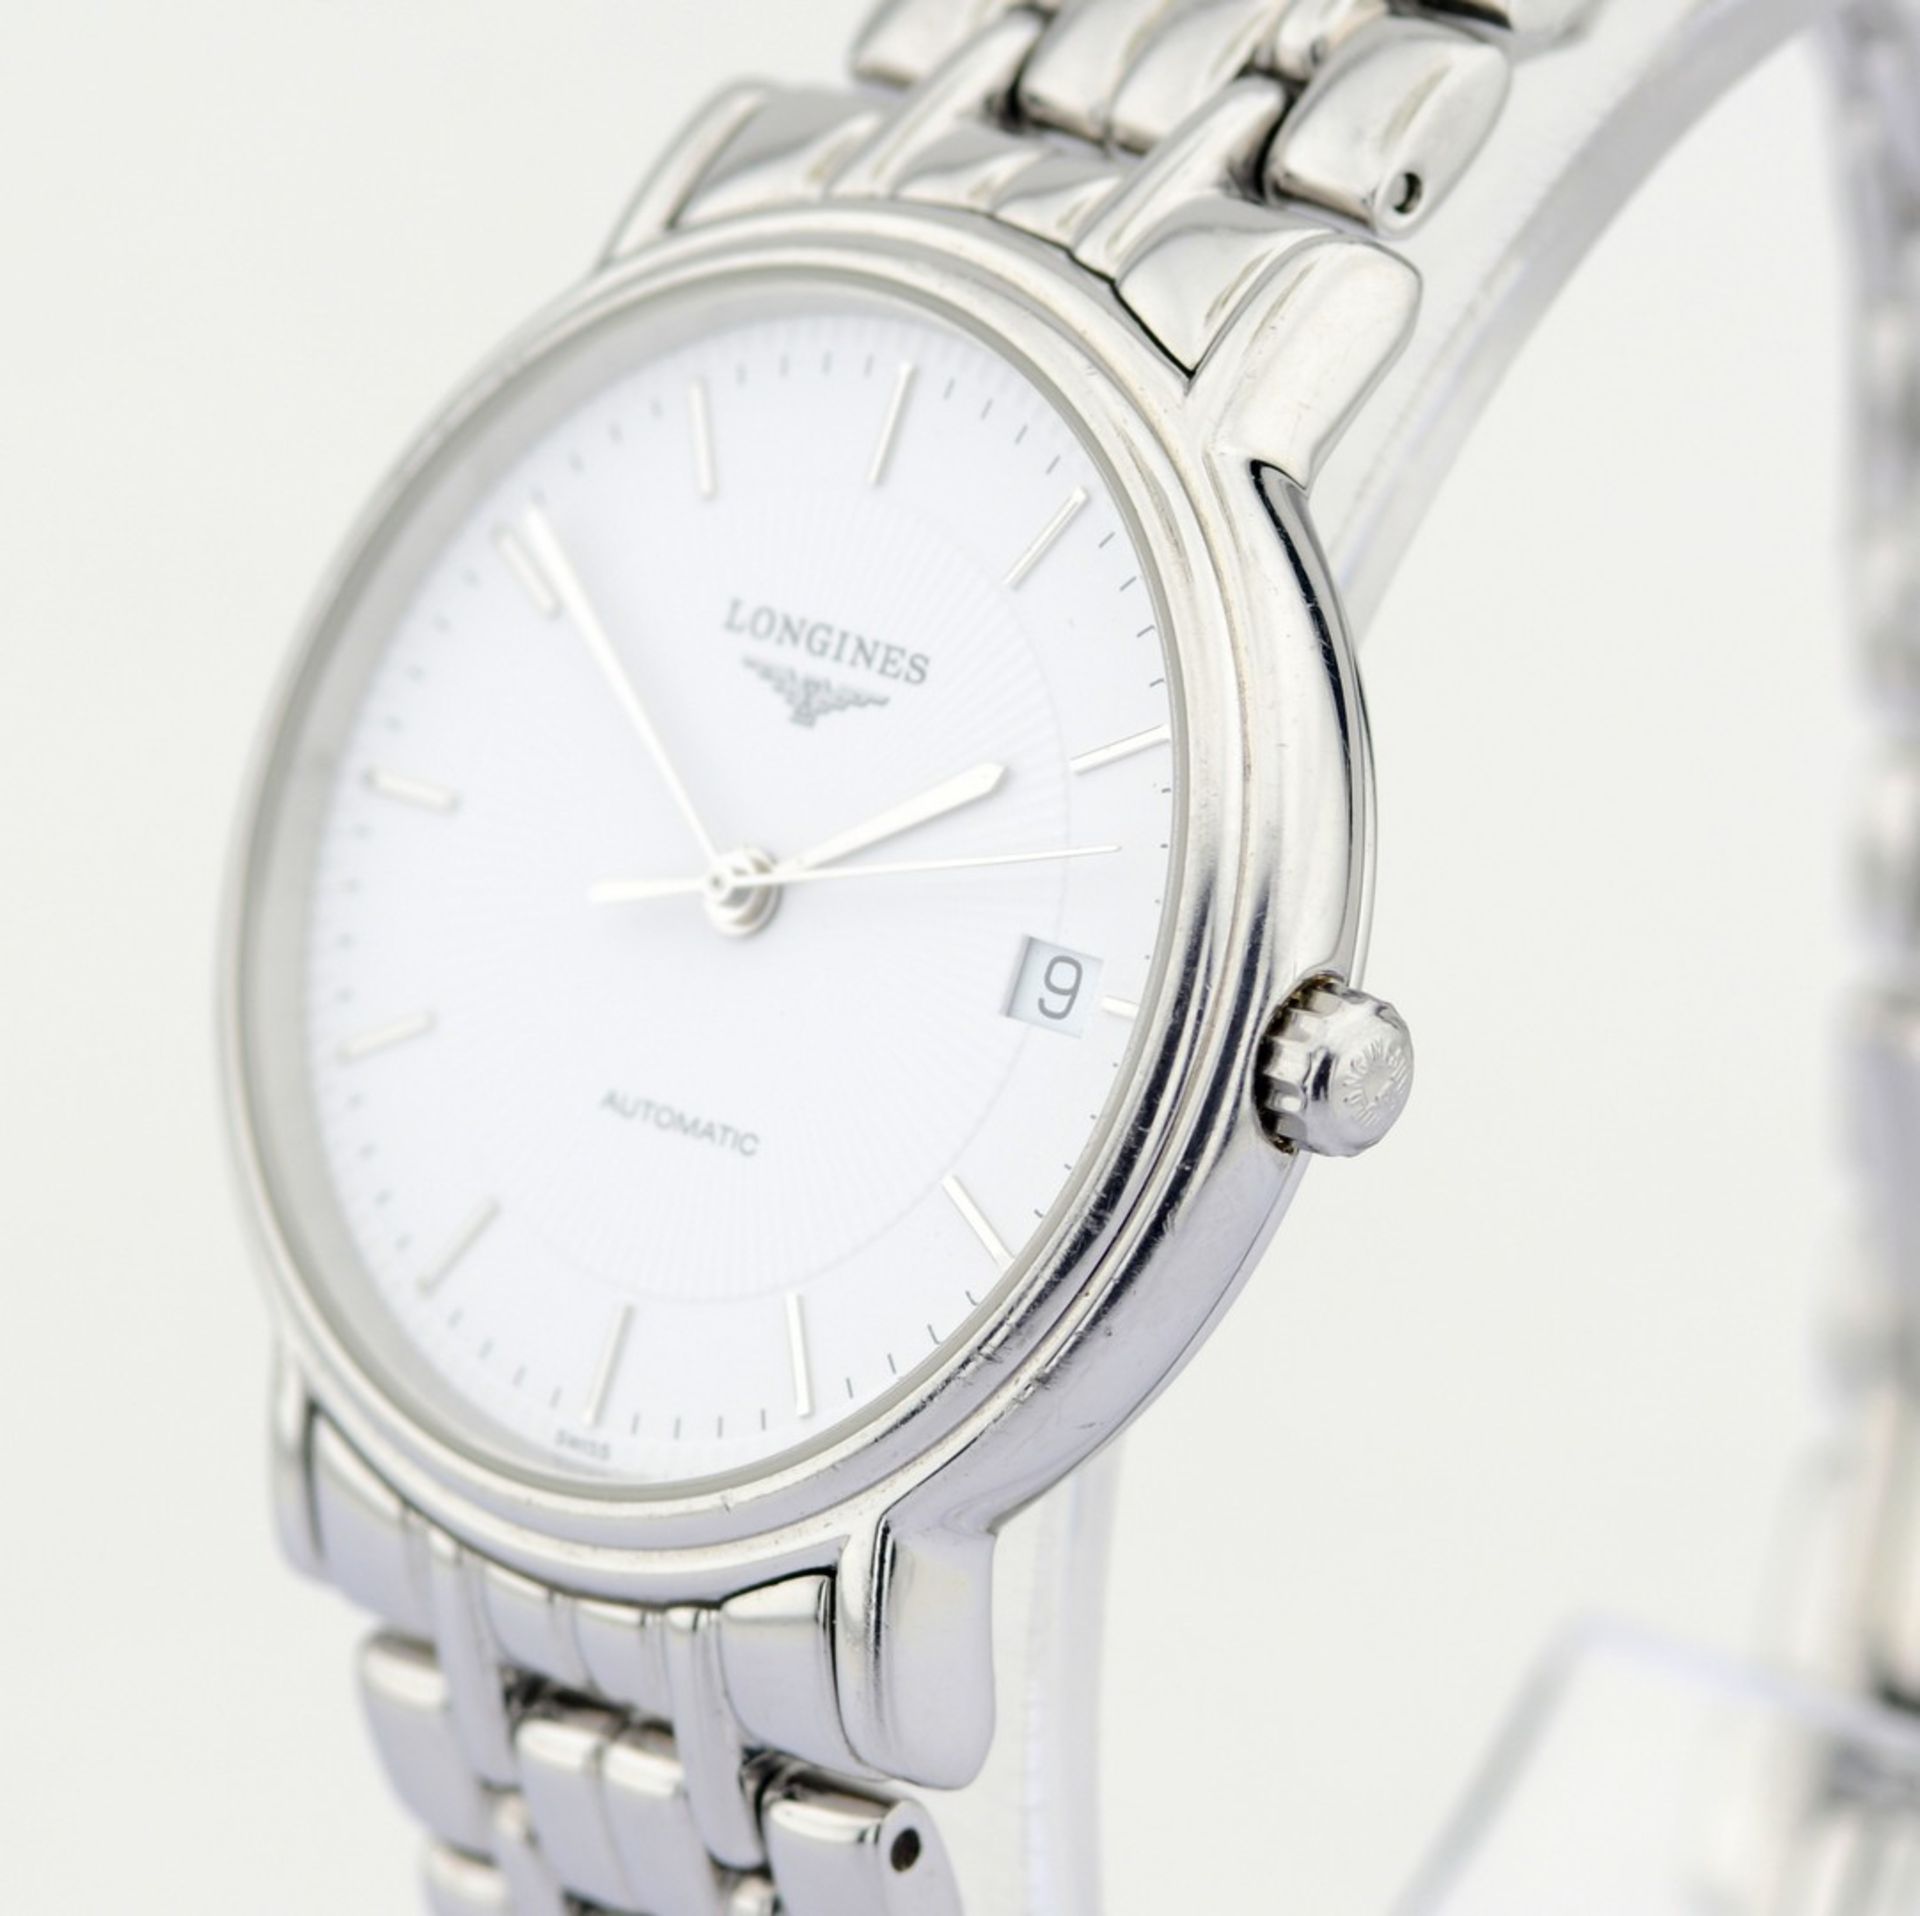 Longines / Presence Automatic Date 34 mm - Gentlemen's Steel Wristwatch - Image 5 of 7